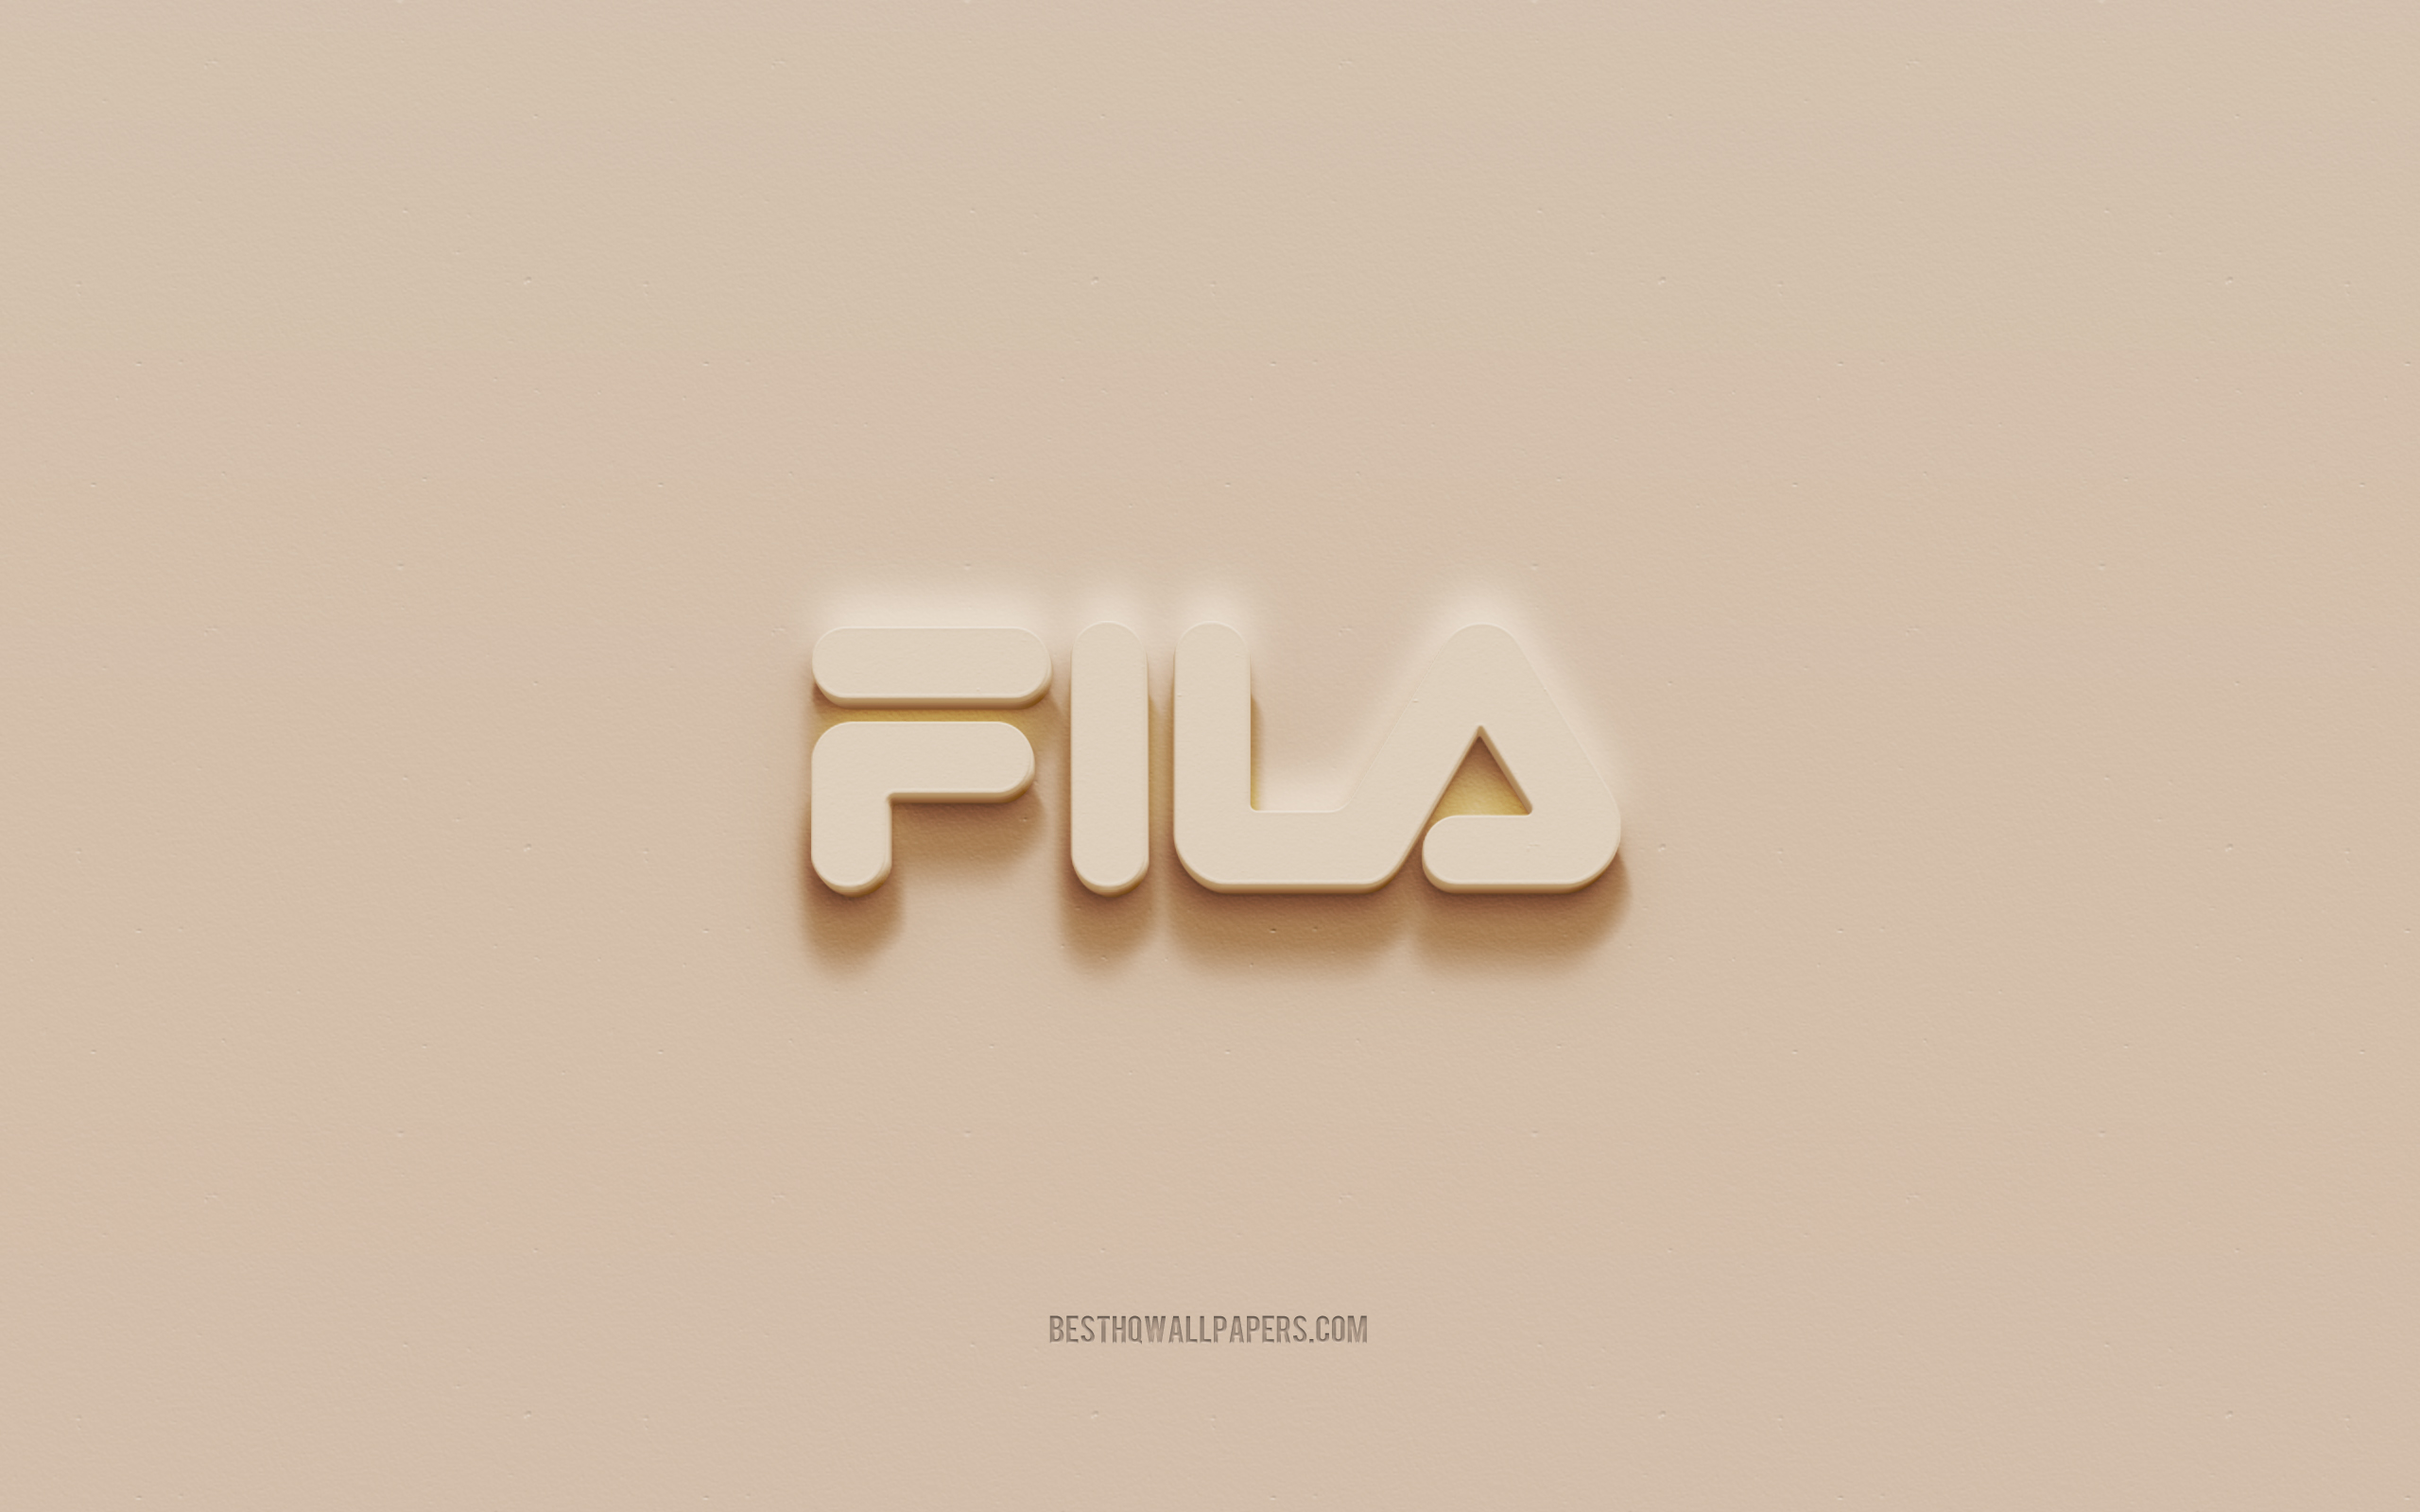 Download wallpaper Fila logo, brown plaster background, Fila 3D logo, brands, Fila emblem, 3D art, Fila for desktop with resolution 2560x1600. High Quality HD picture wallpaper